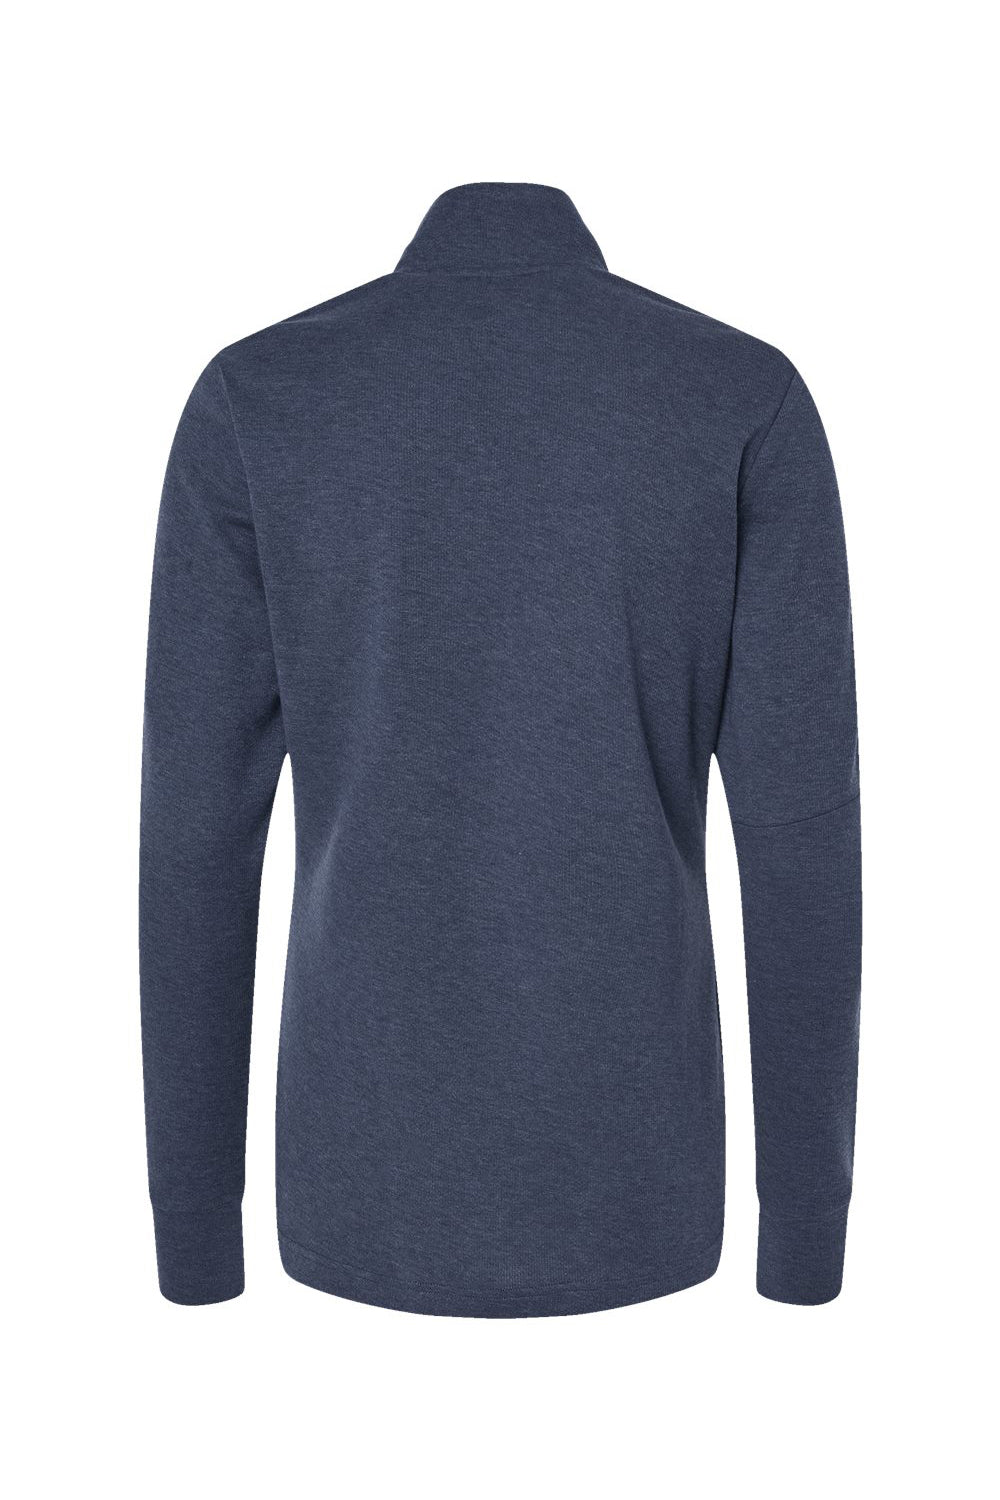 Adidas A555 Womens 3 Stripes 1/4 Zip Sweater Collegiate Navy Blue Melange Flat Back